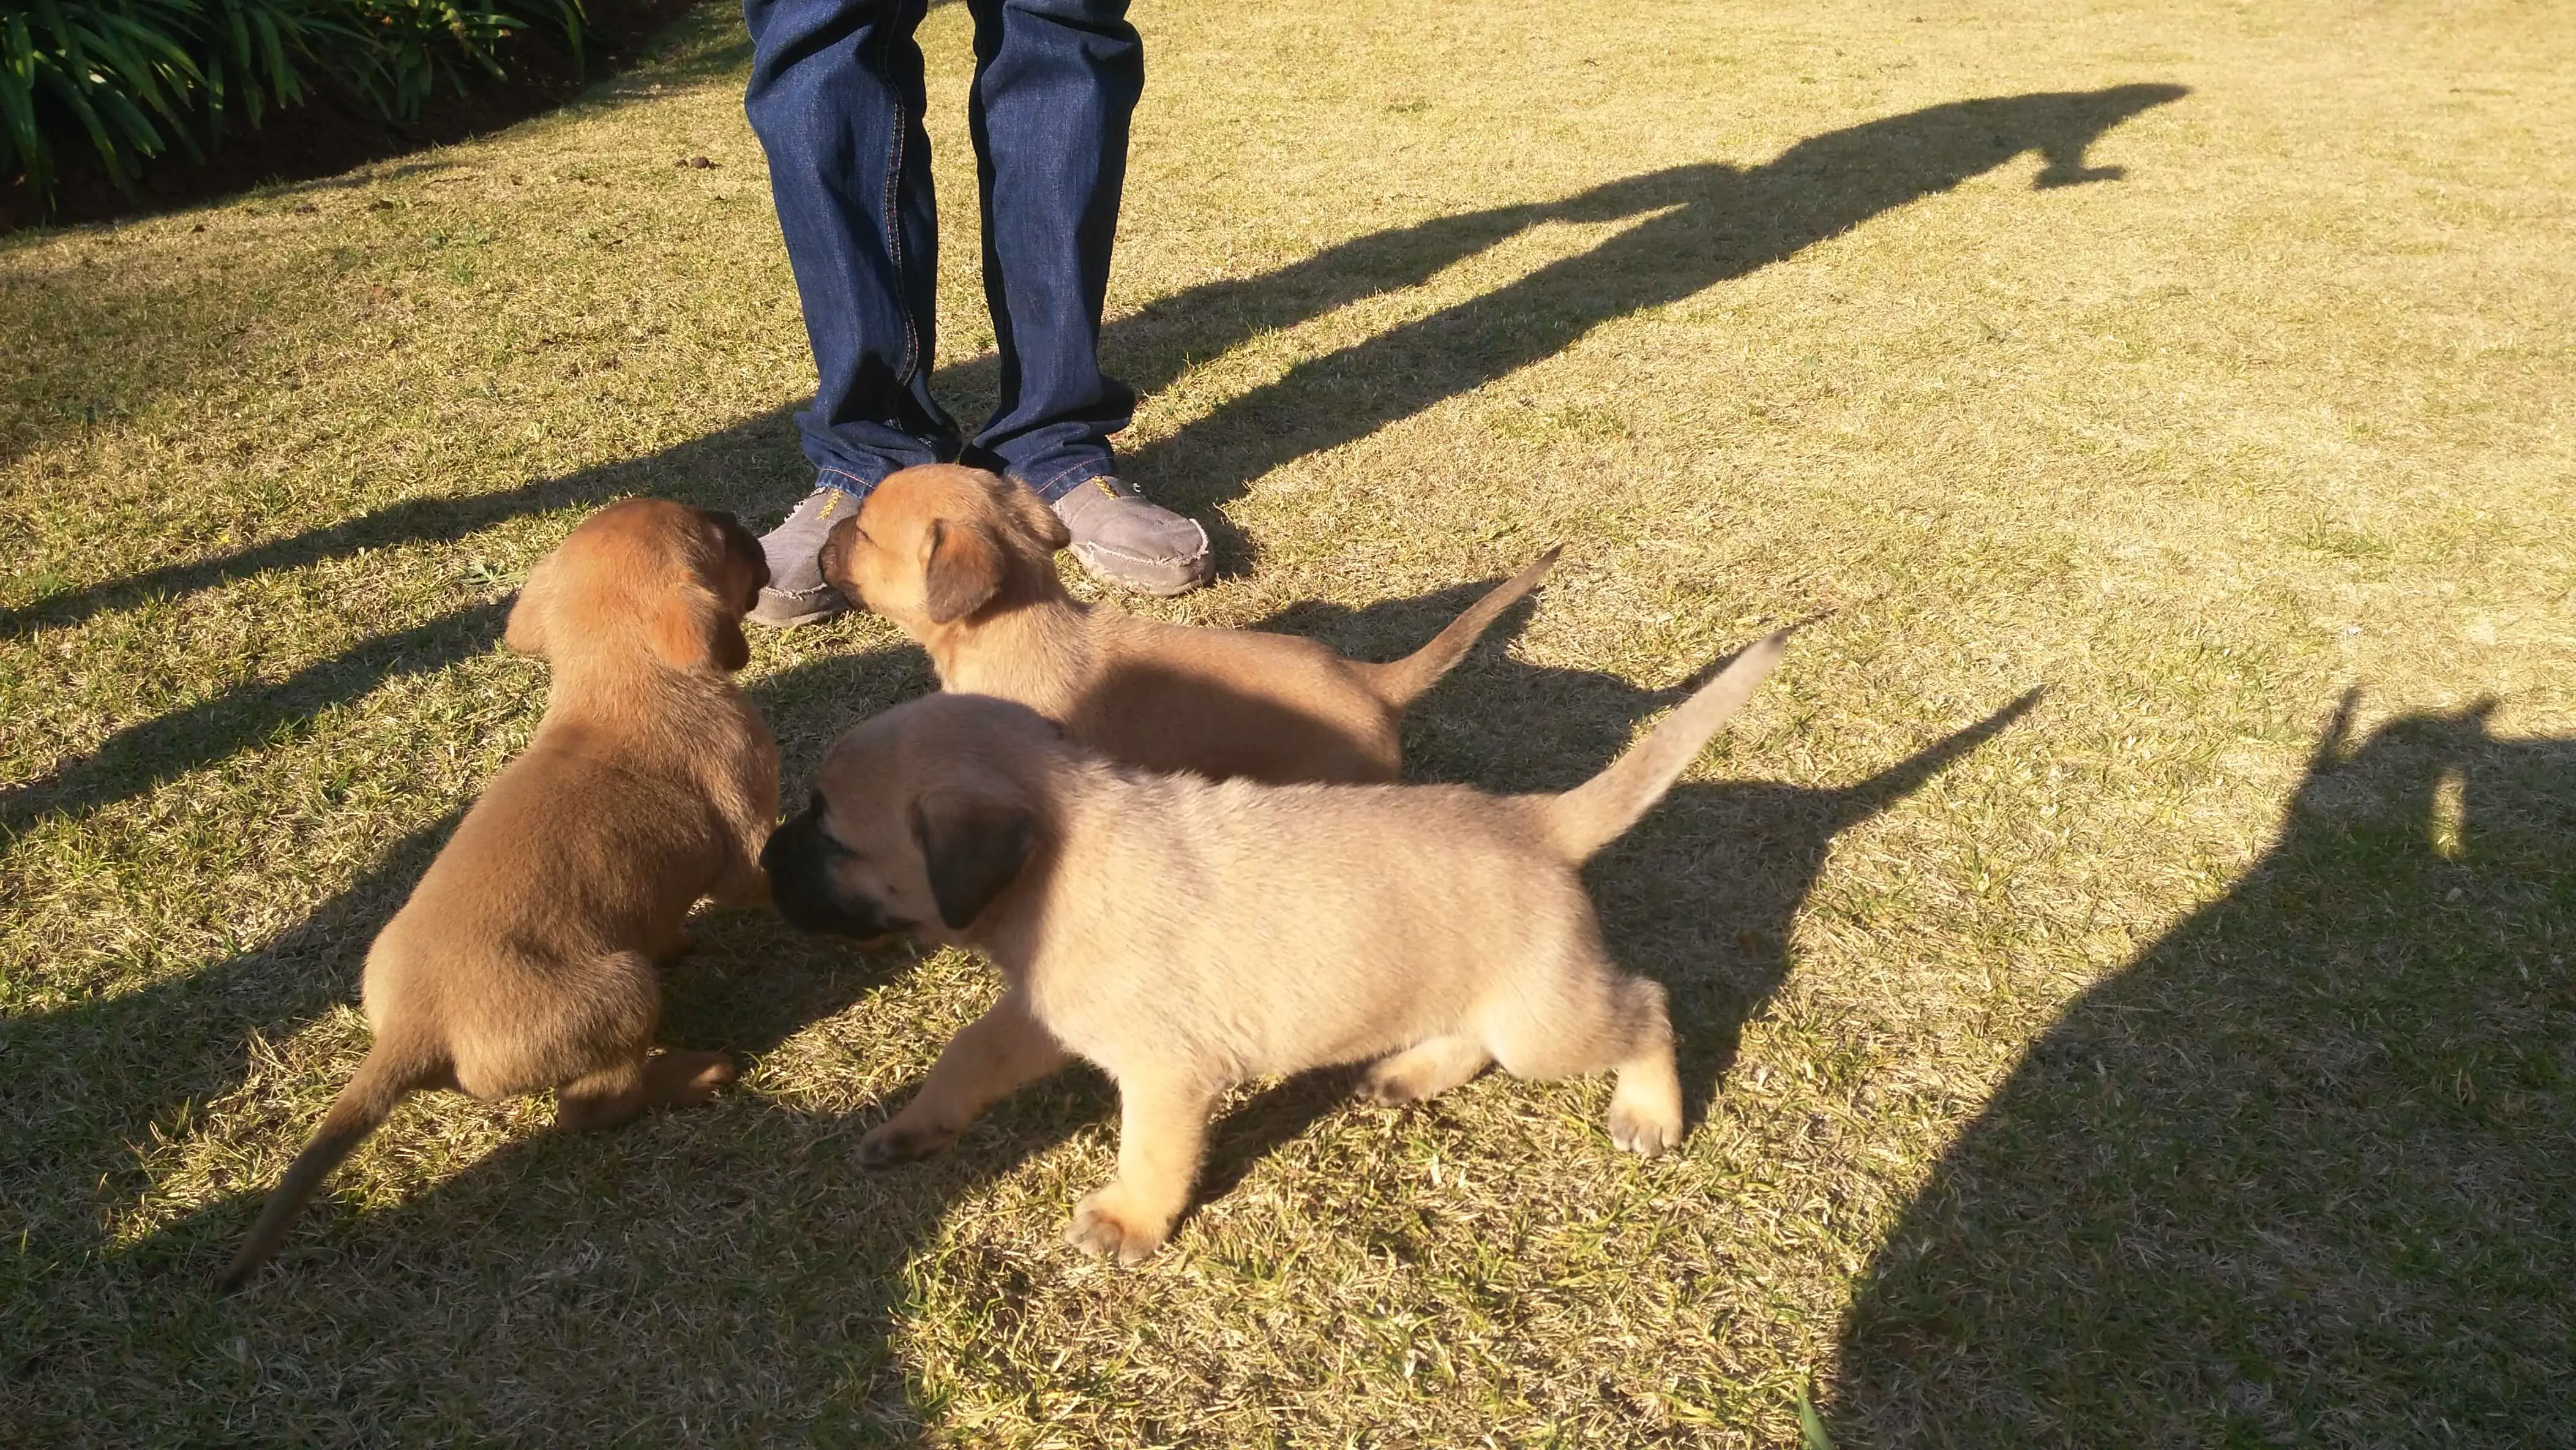 Boerboel Puppies for Sale in Johannesburg by Amanda Greyling De Jager